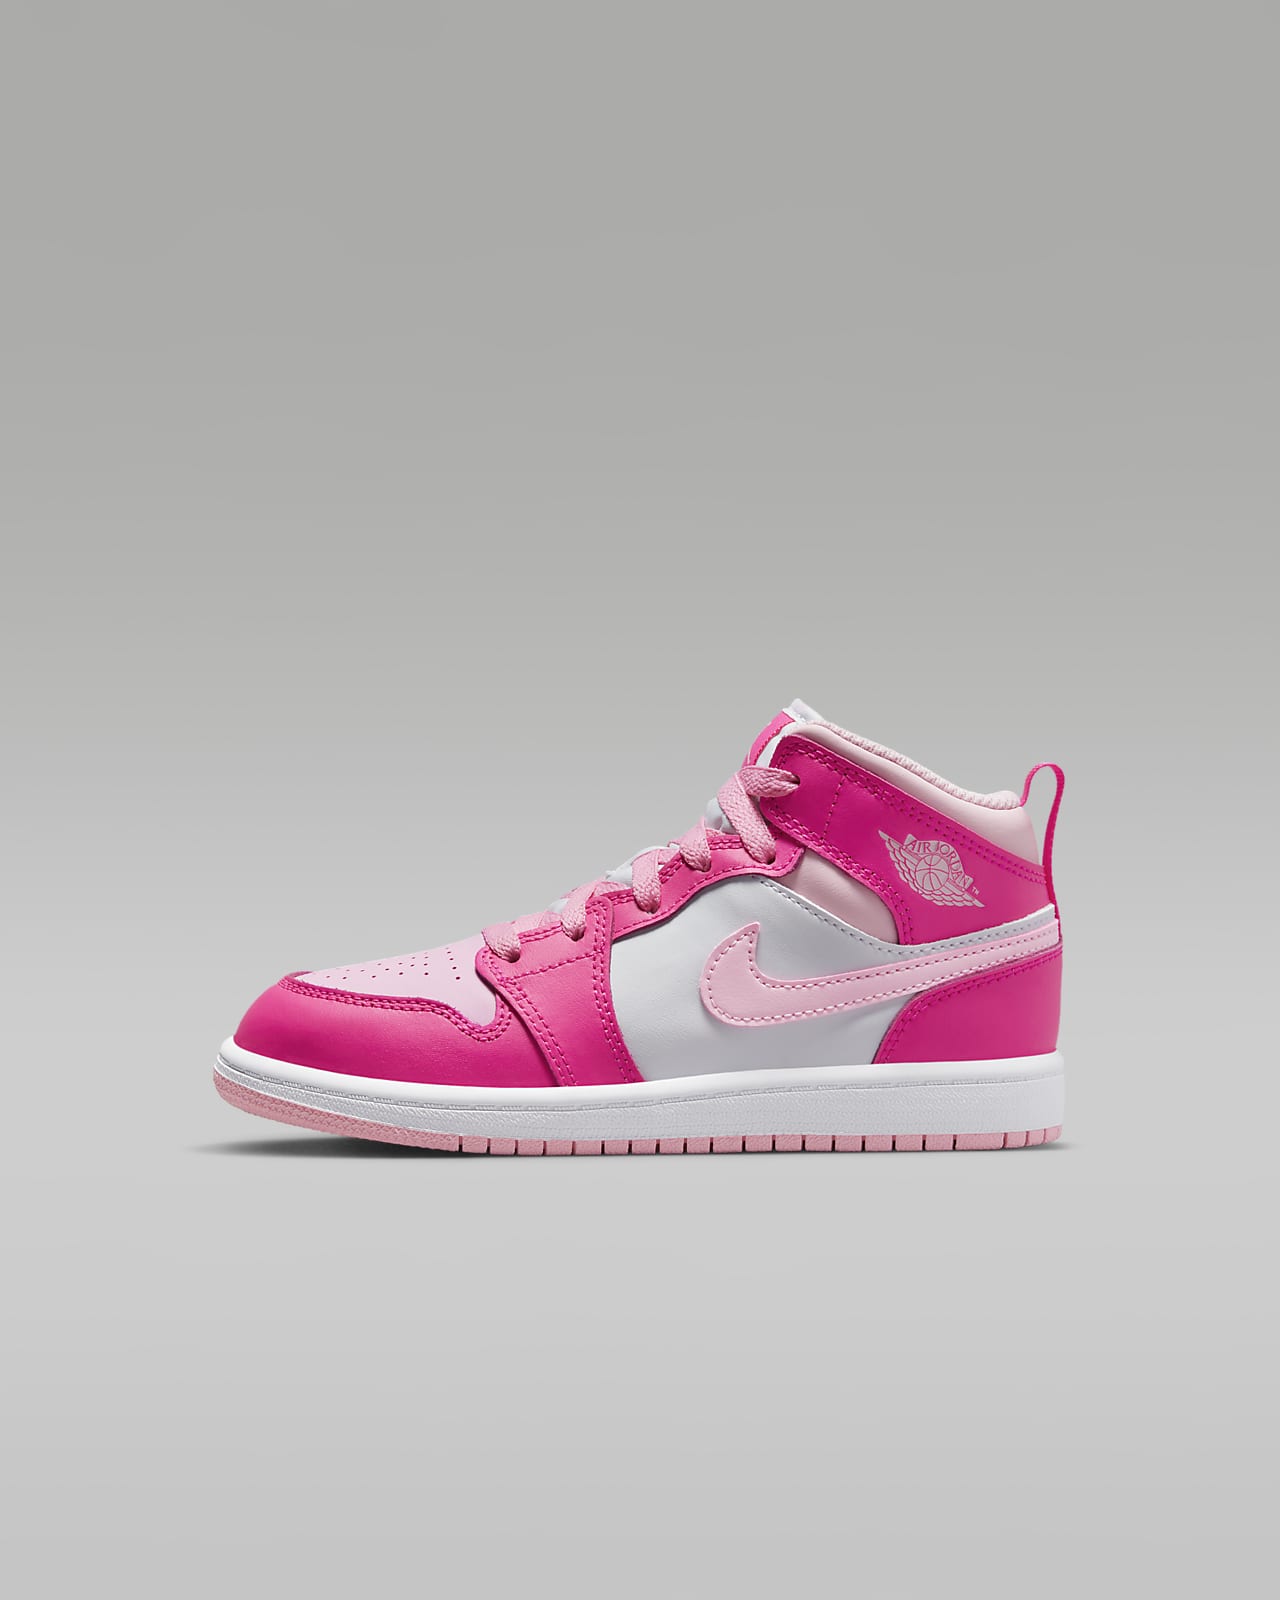 Brig Parlament Dwell Jordan 1 Mid-sko til mindre børn. Nike DK